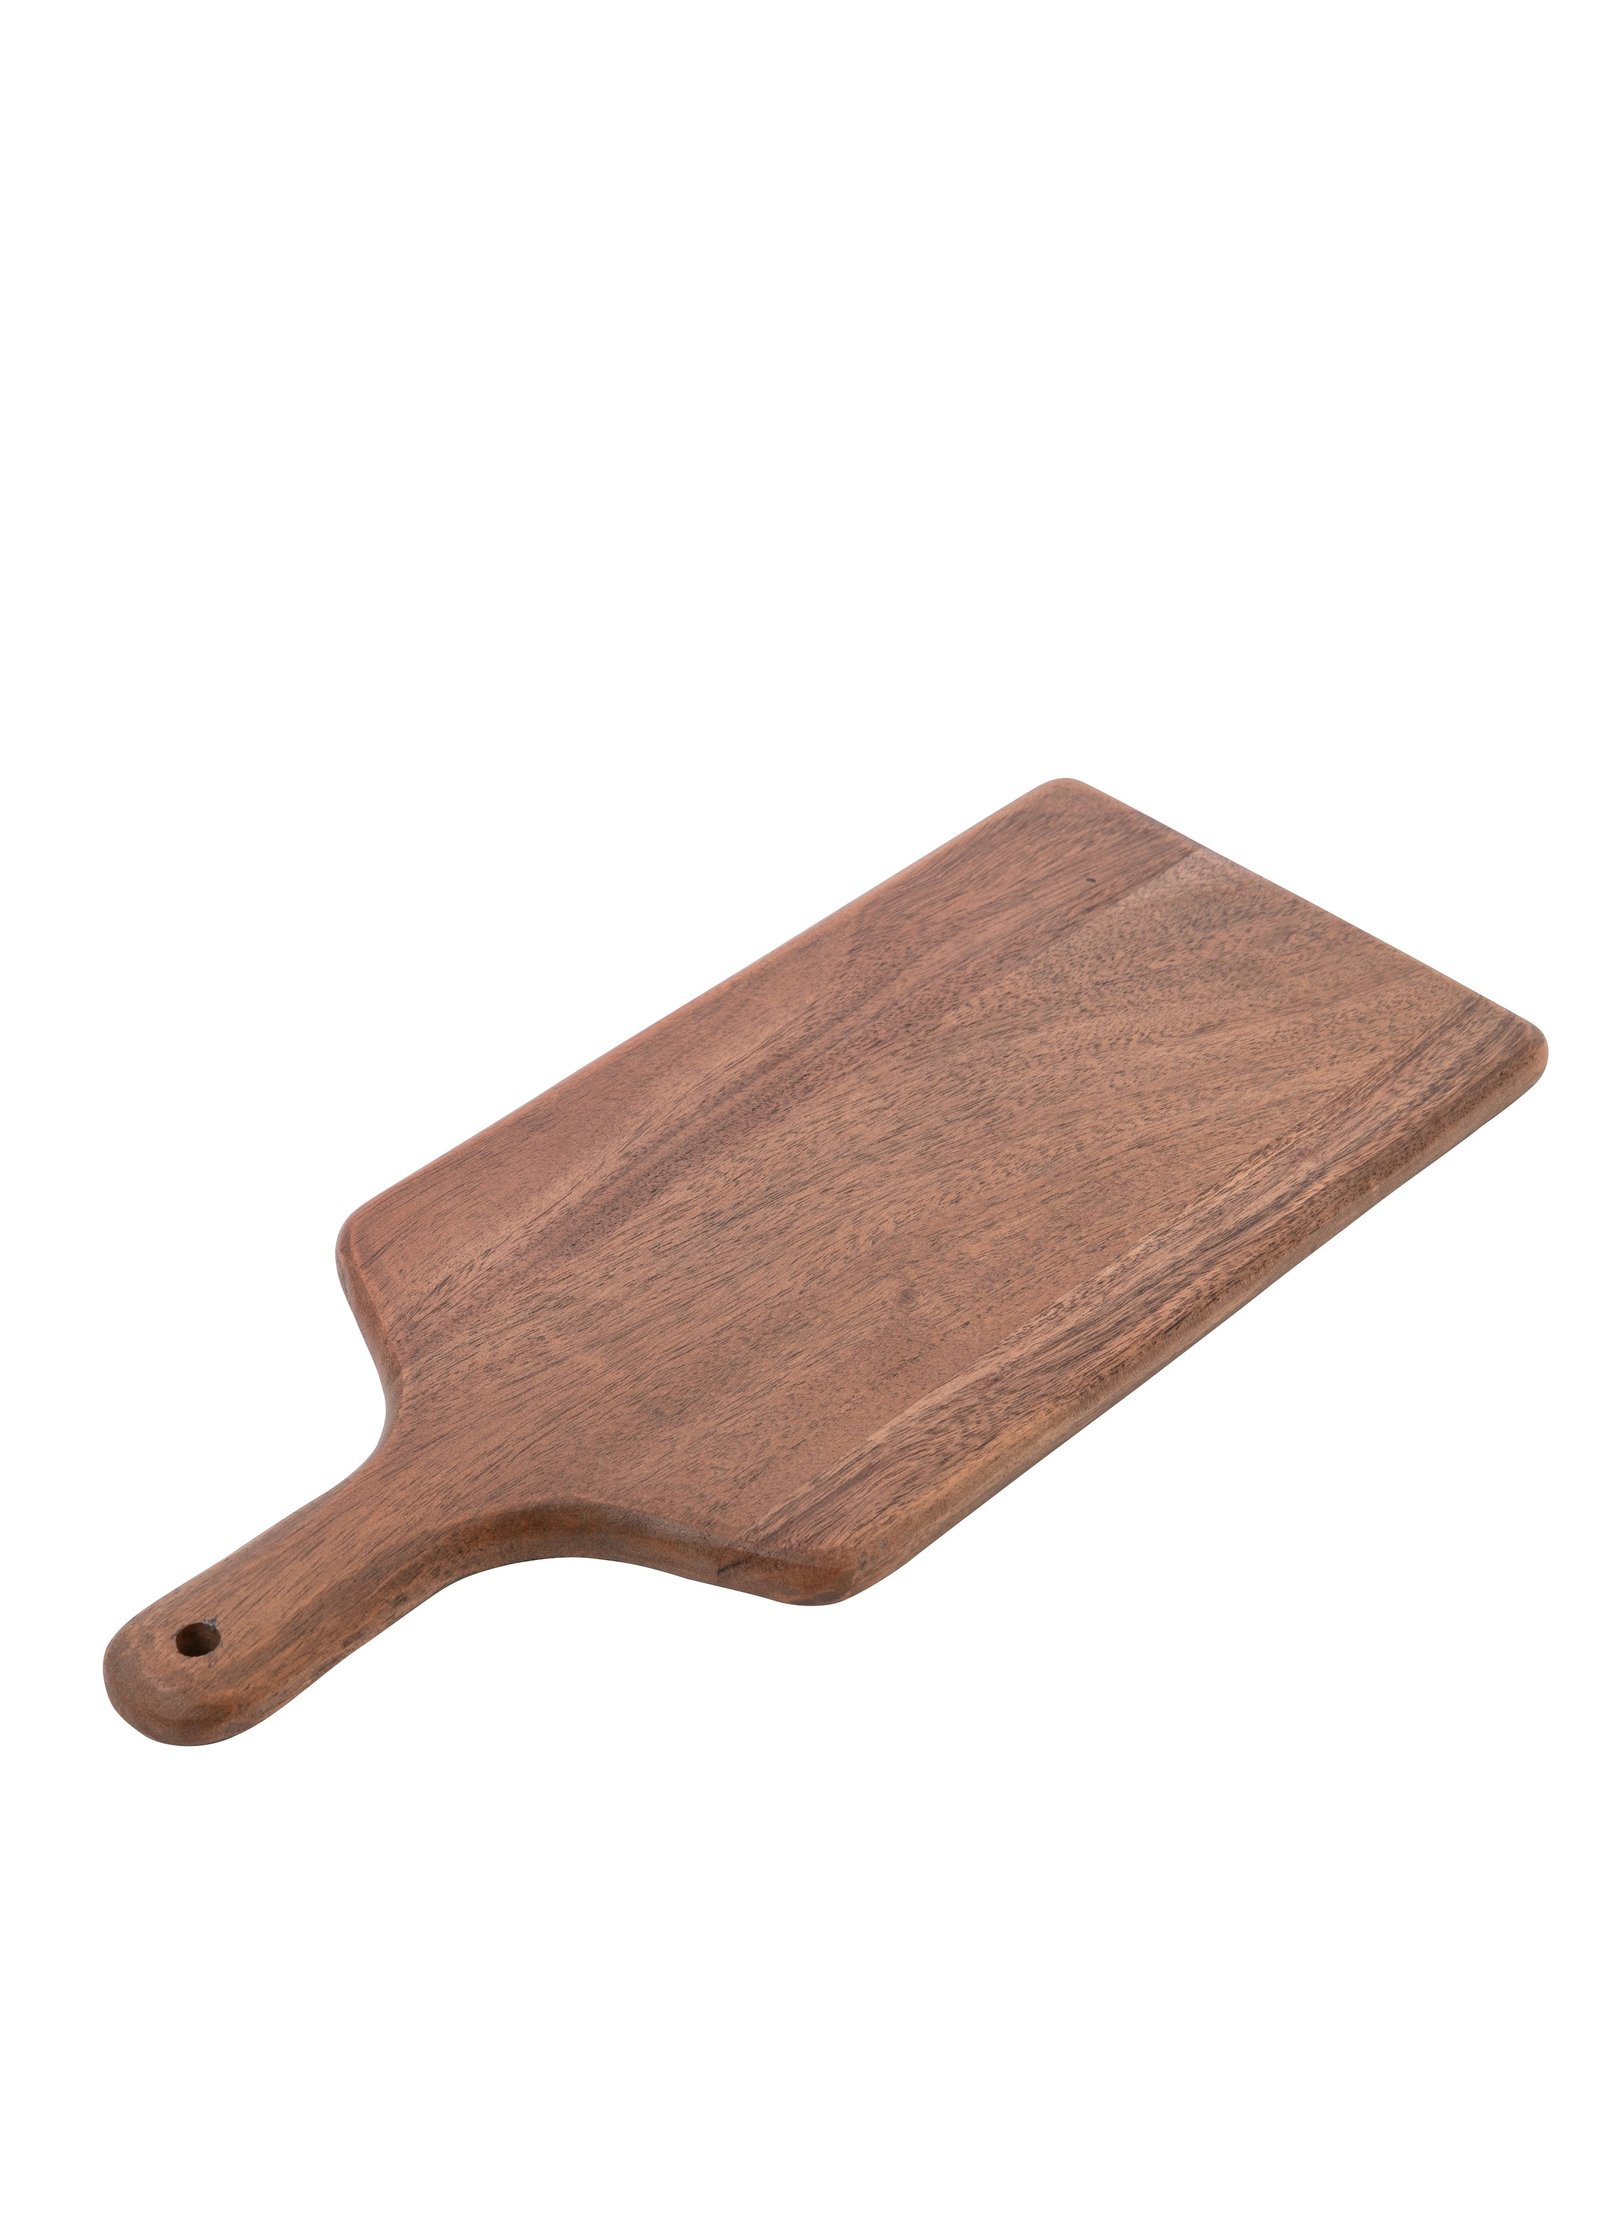 Small wood cutting board Image 2